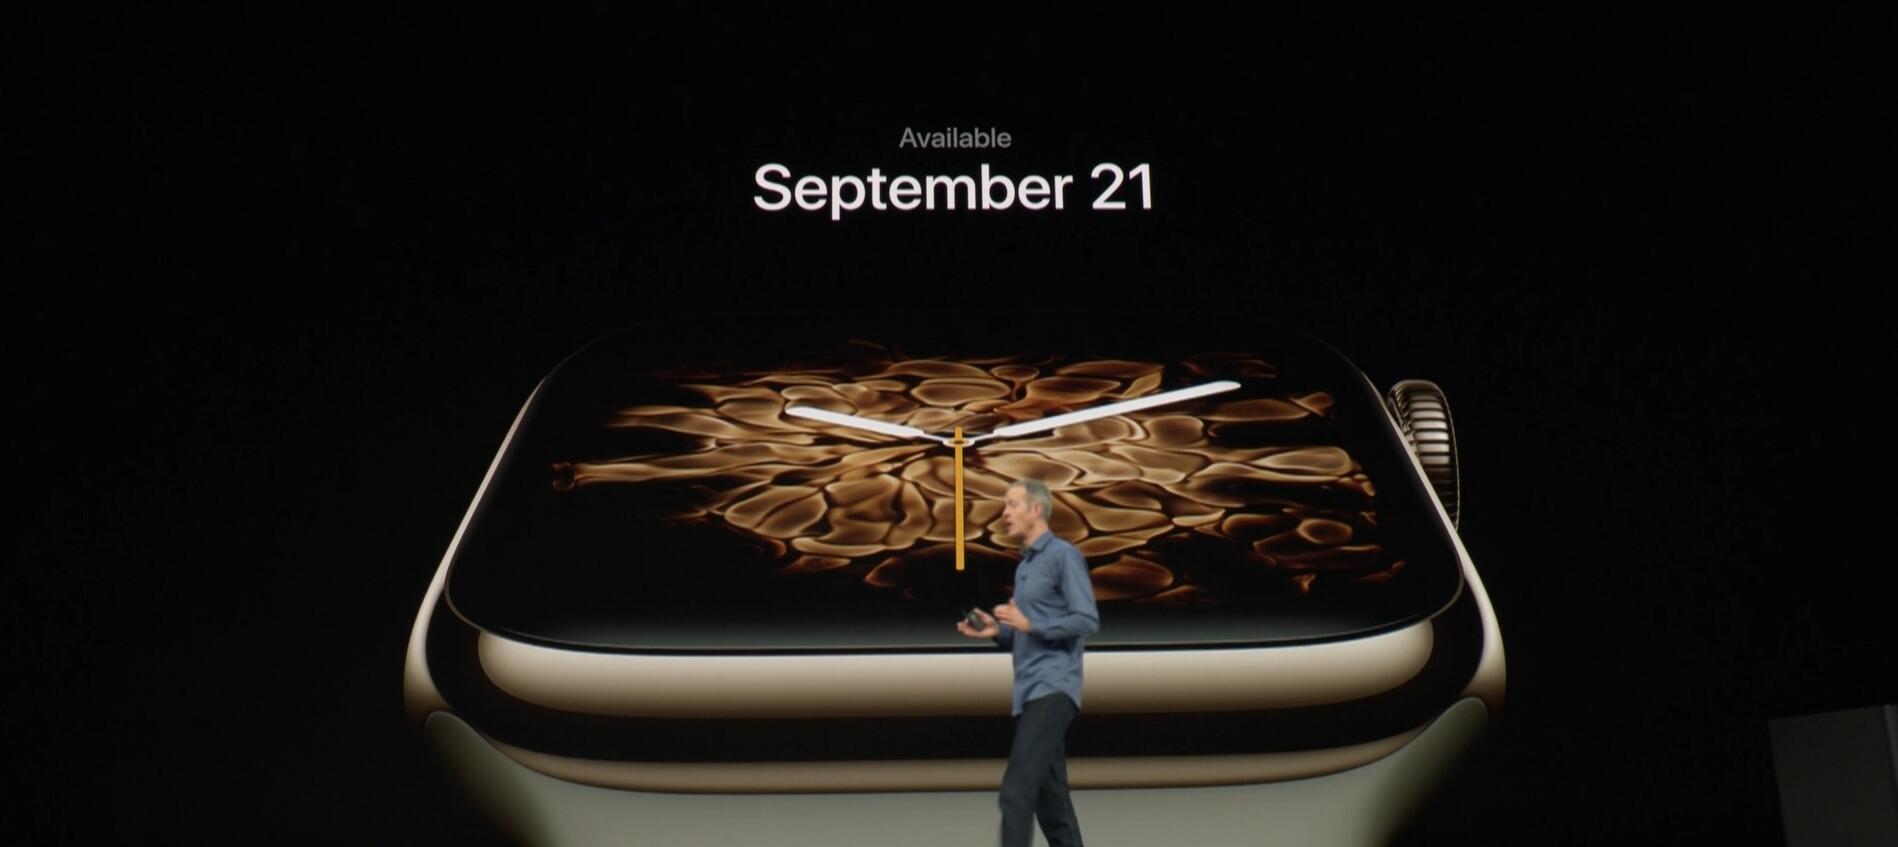 Apple Watch 4发布：表盘更大 续航更久